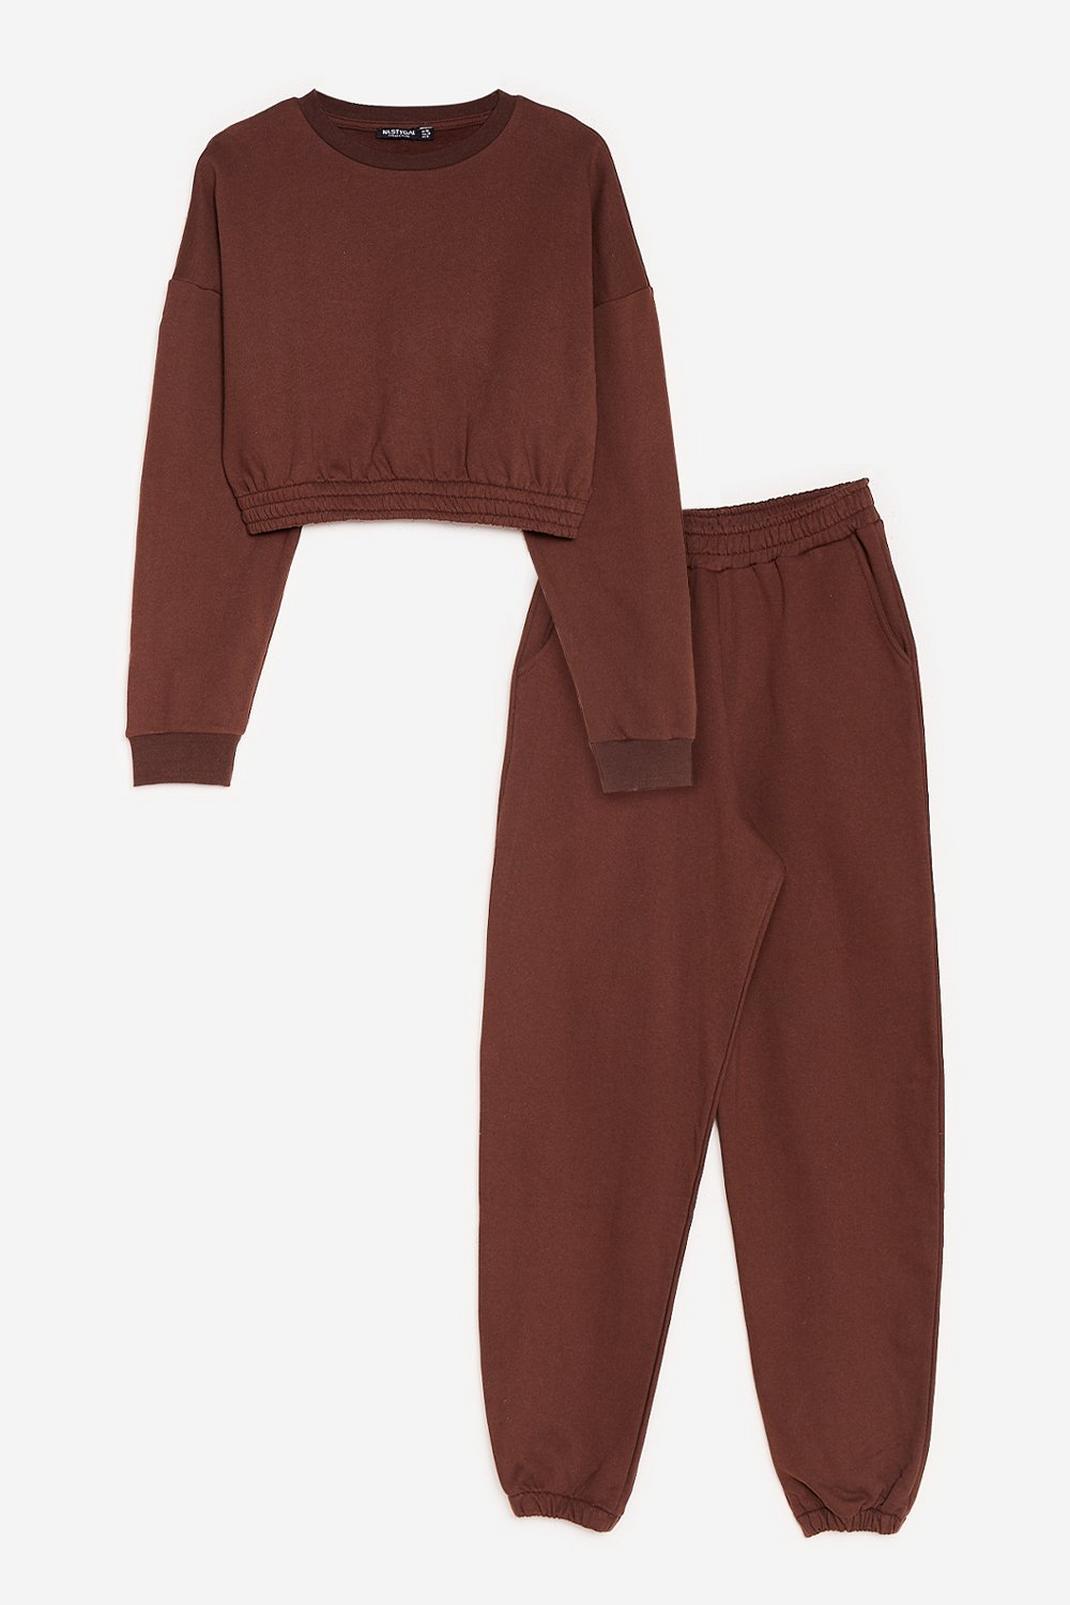 Brown Slouchy Sweatshirt and Tracksuit Pants Loungewear Set image number 1